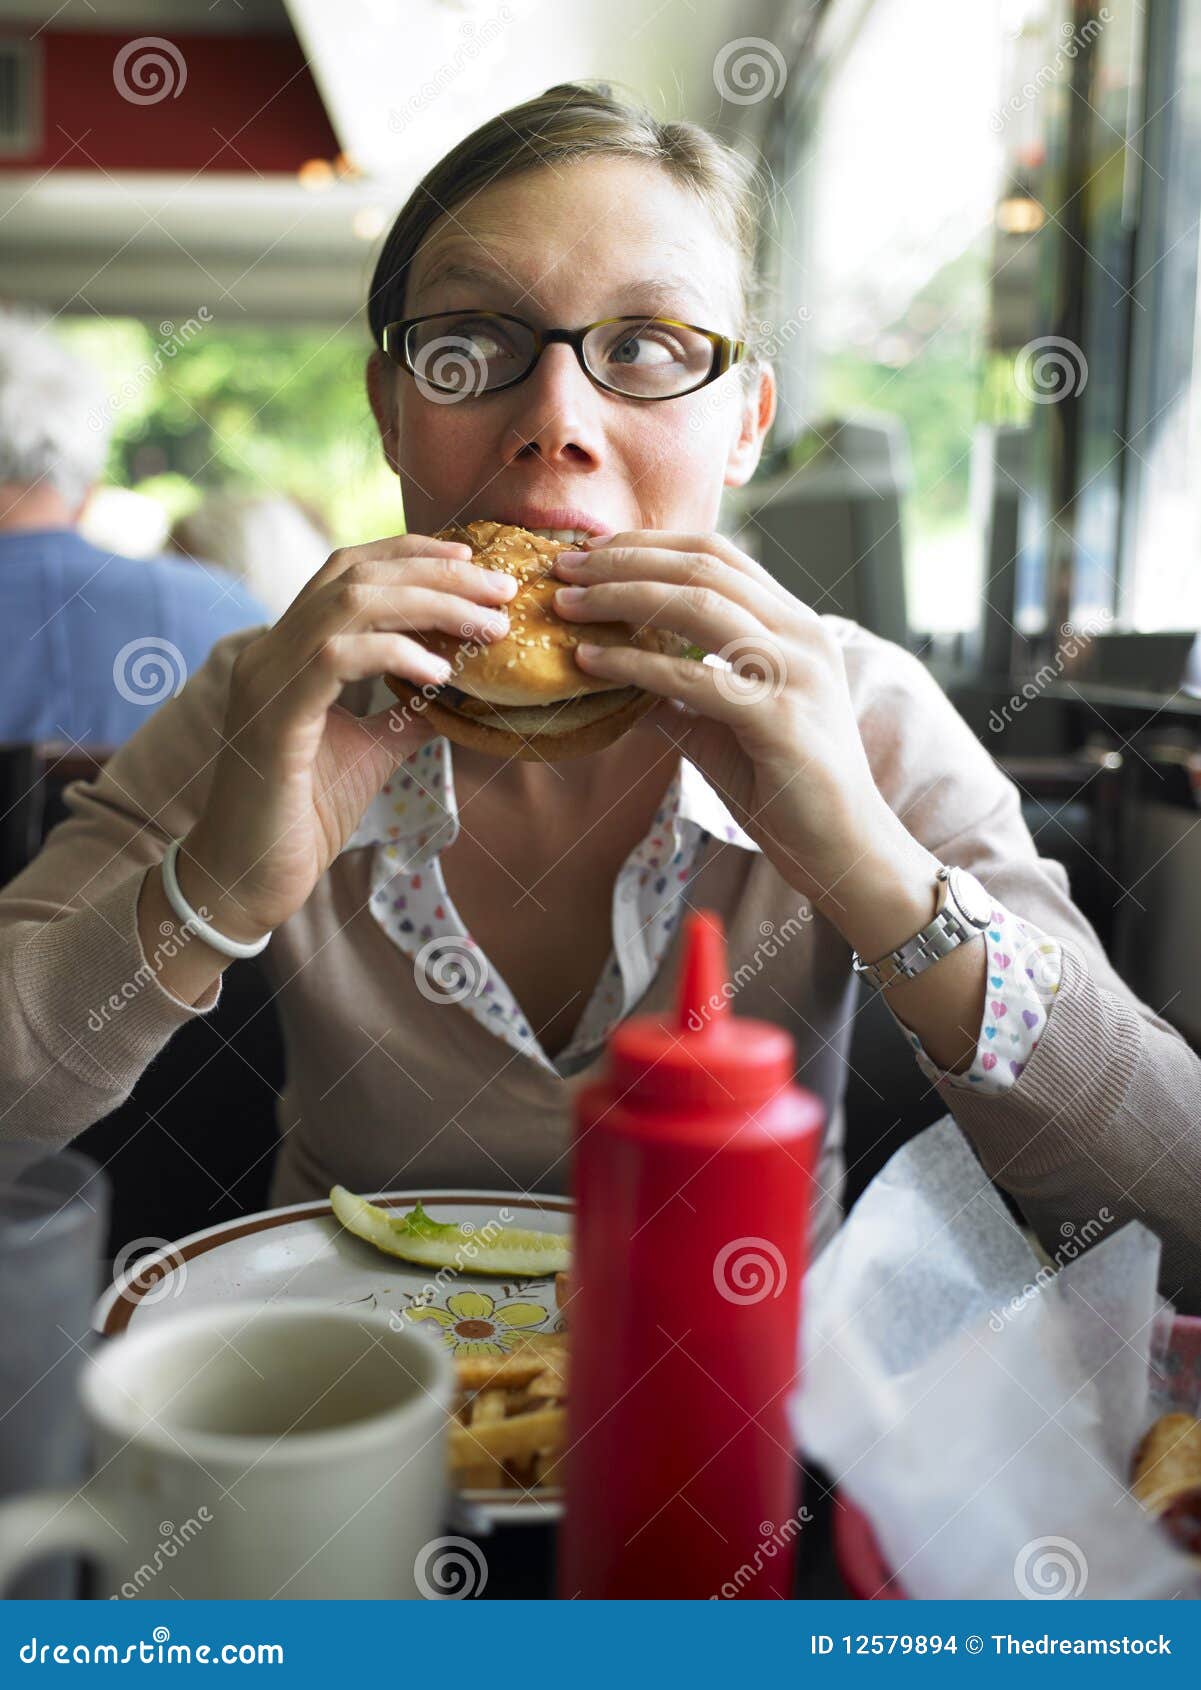 Woman Eating Burger stock photo. Image of head, hair - 12579894